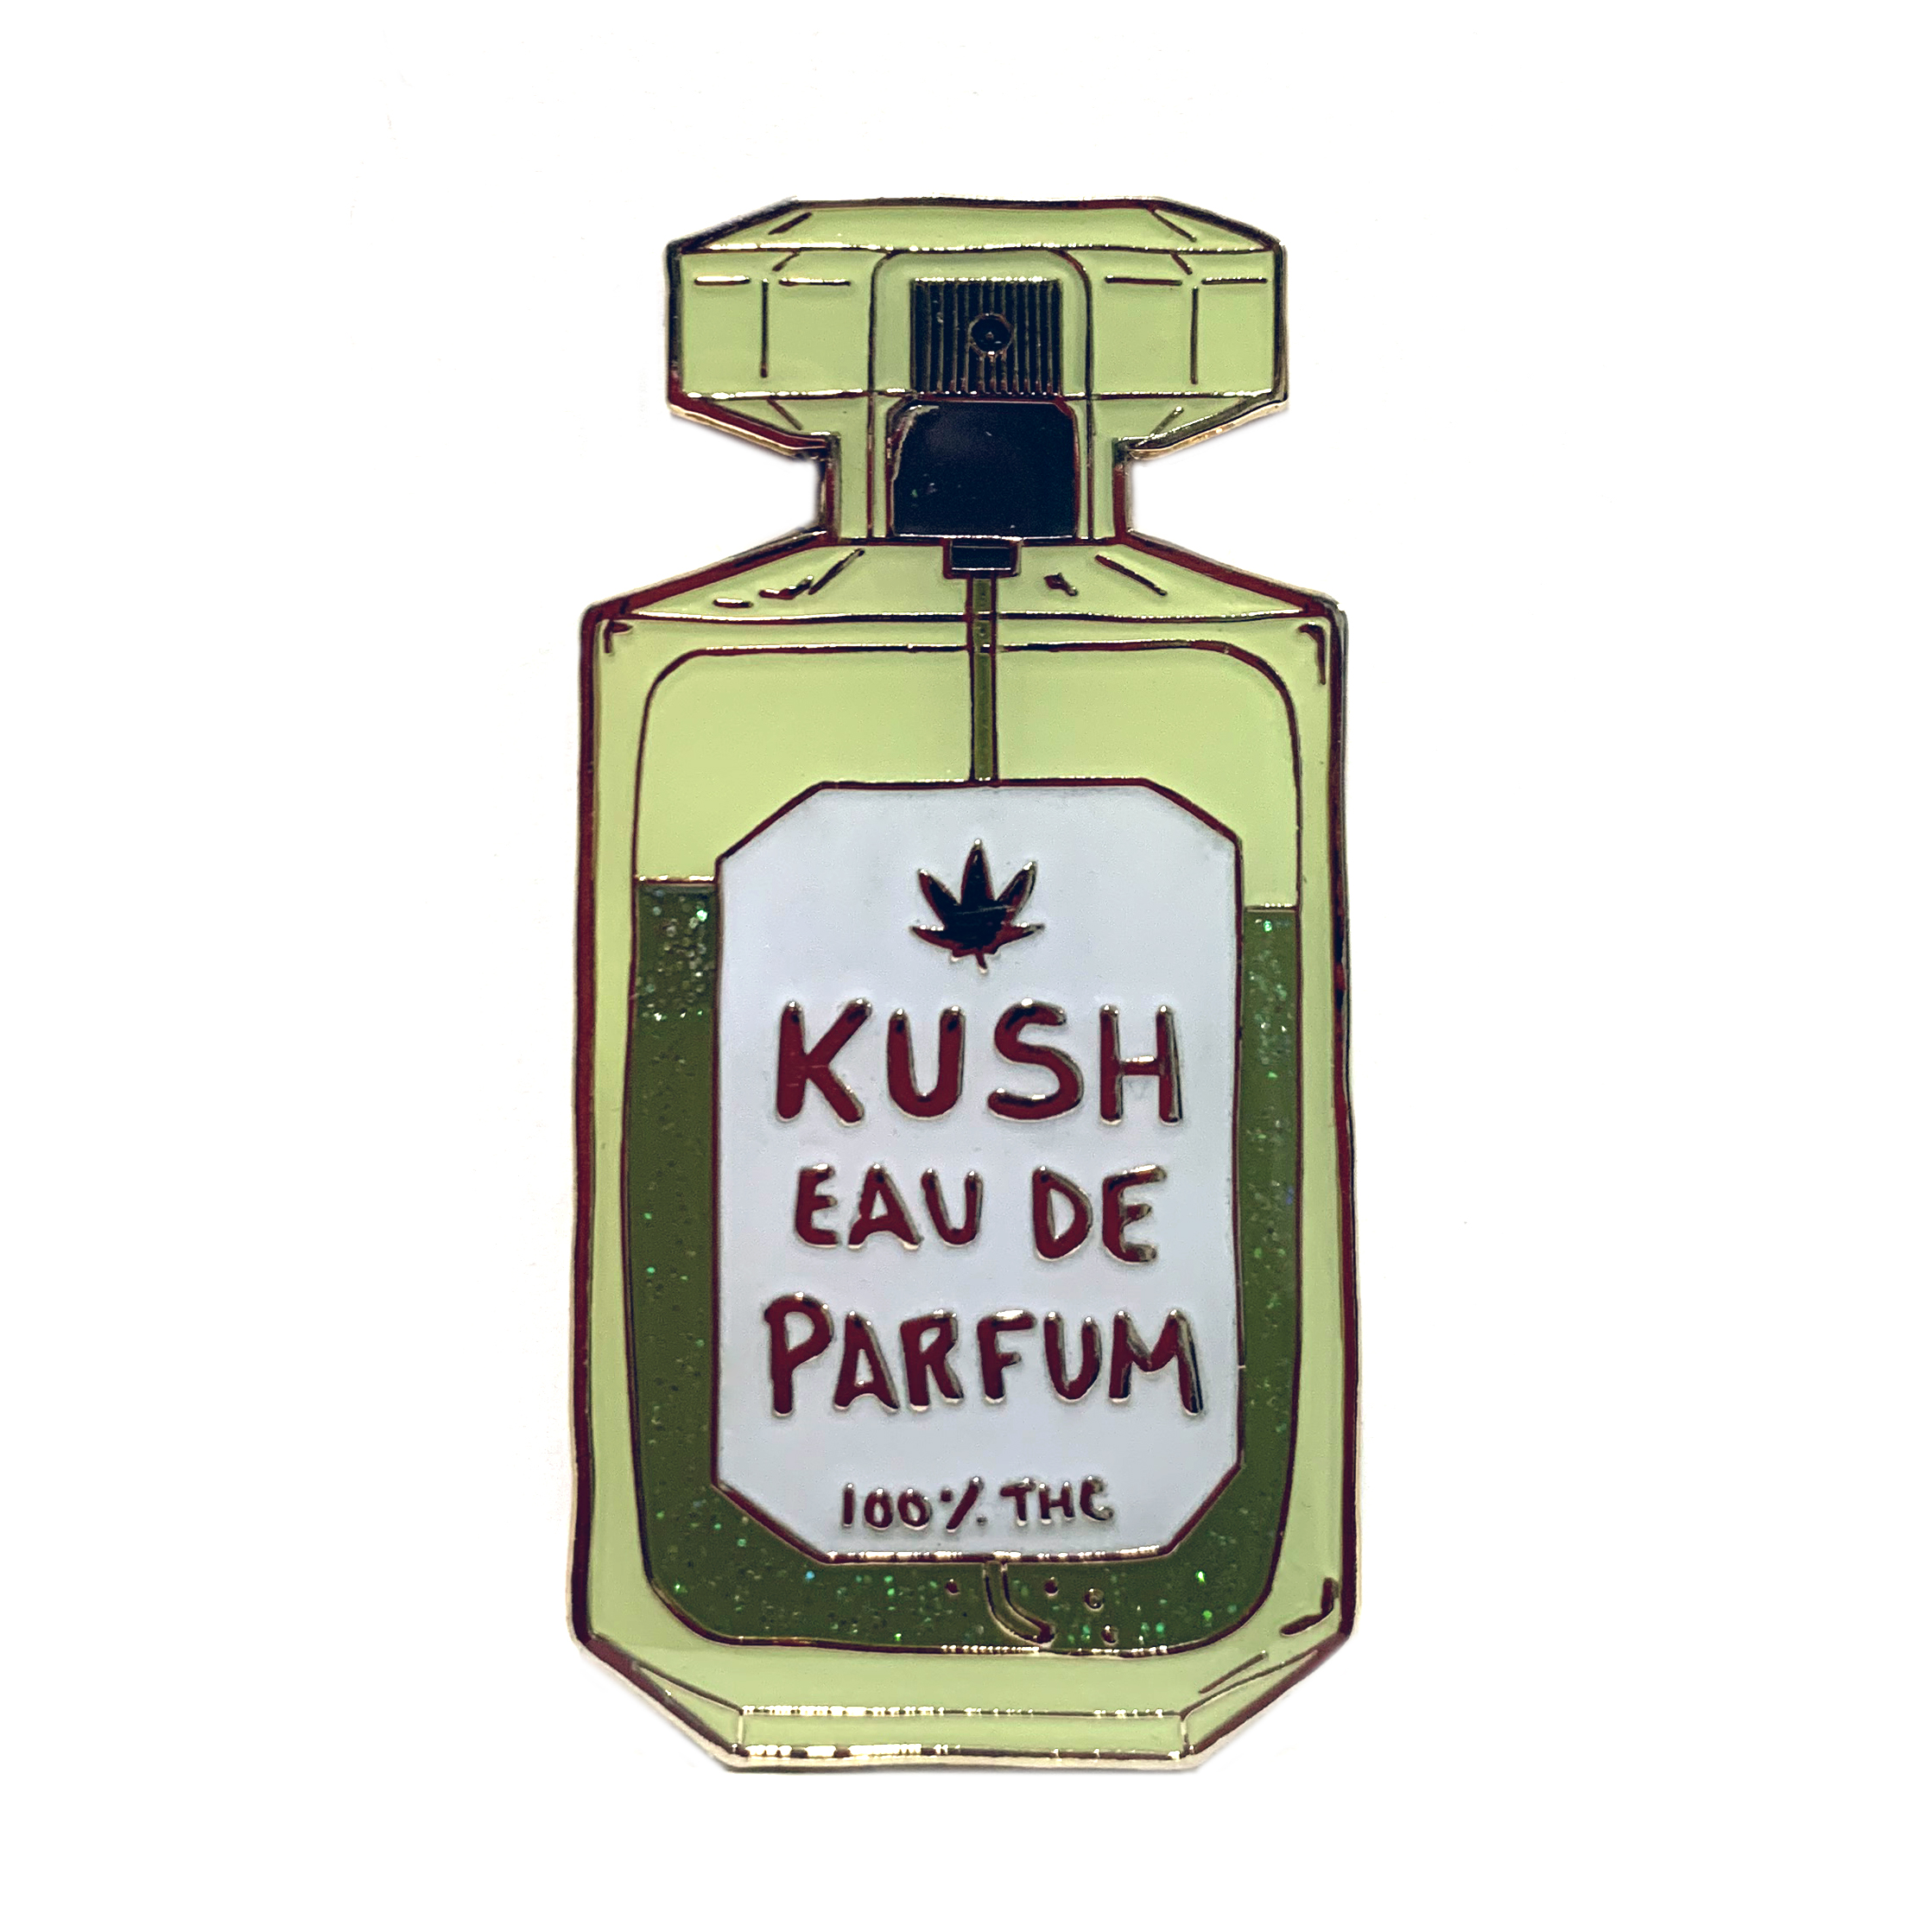 kush eau de parfum_hat pin_green crack